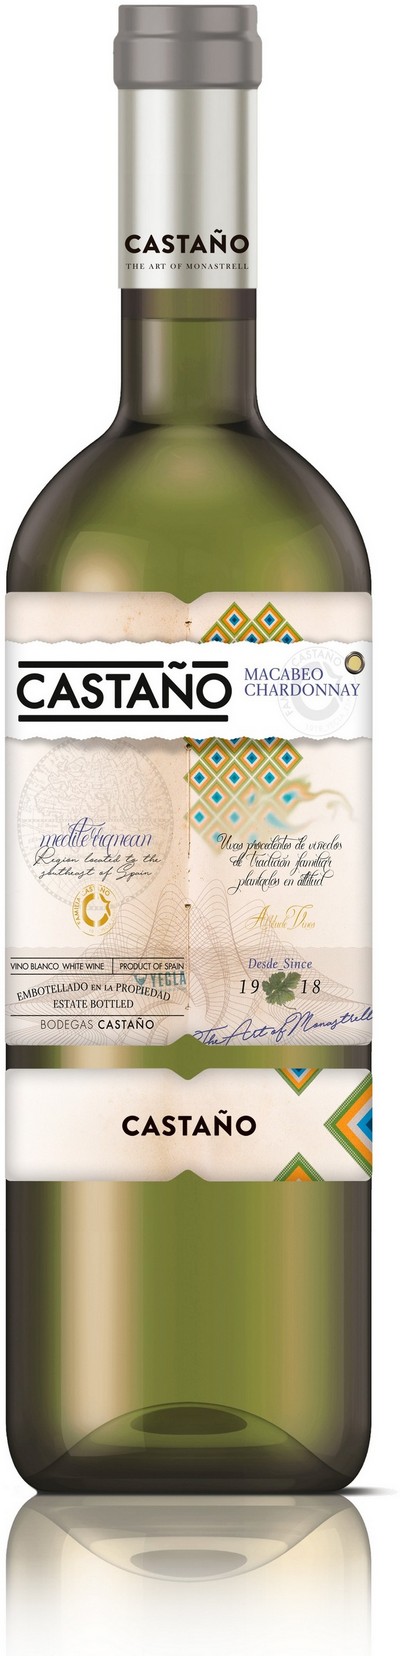 castano-macabeo-chardonnay-2020